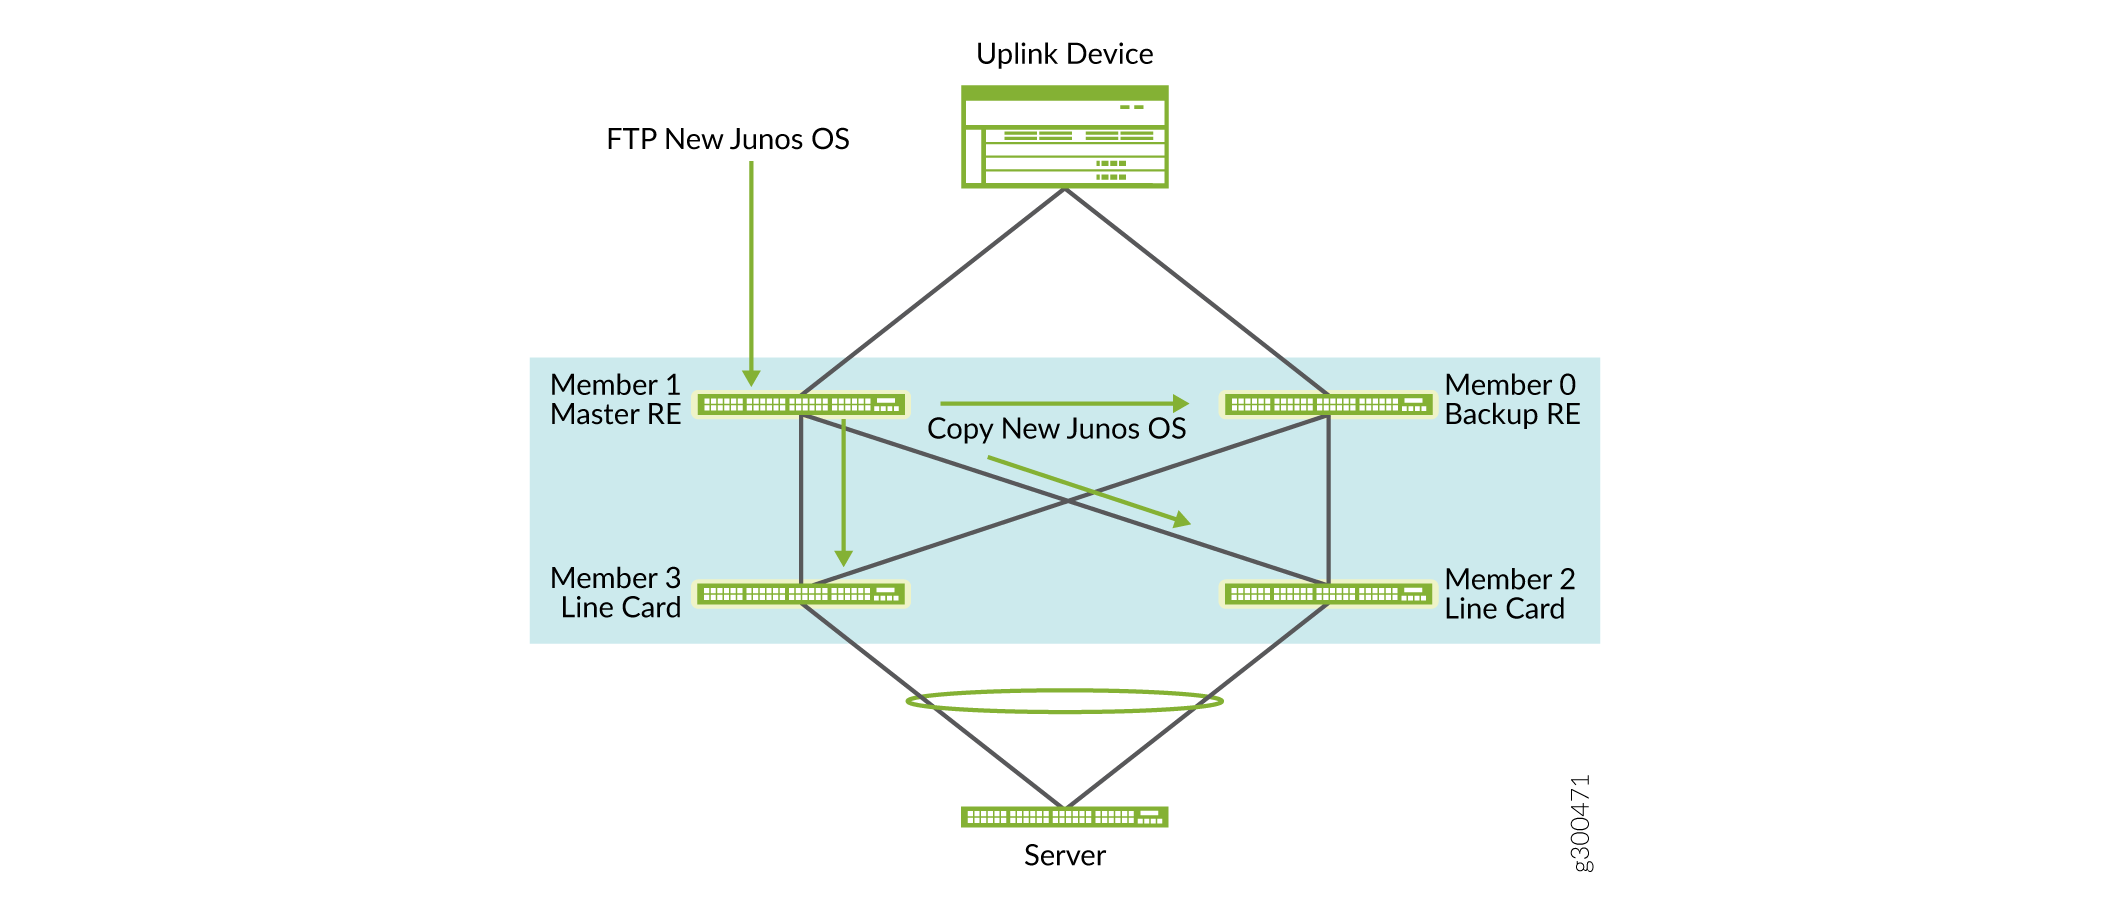 Copy Junos OS Image to VCF members